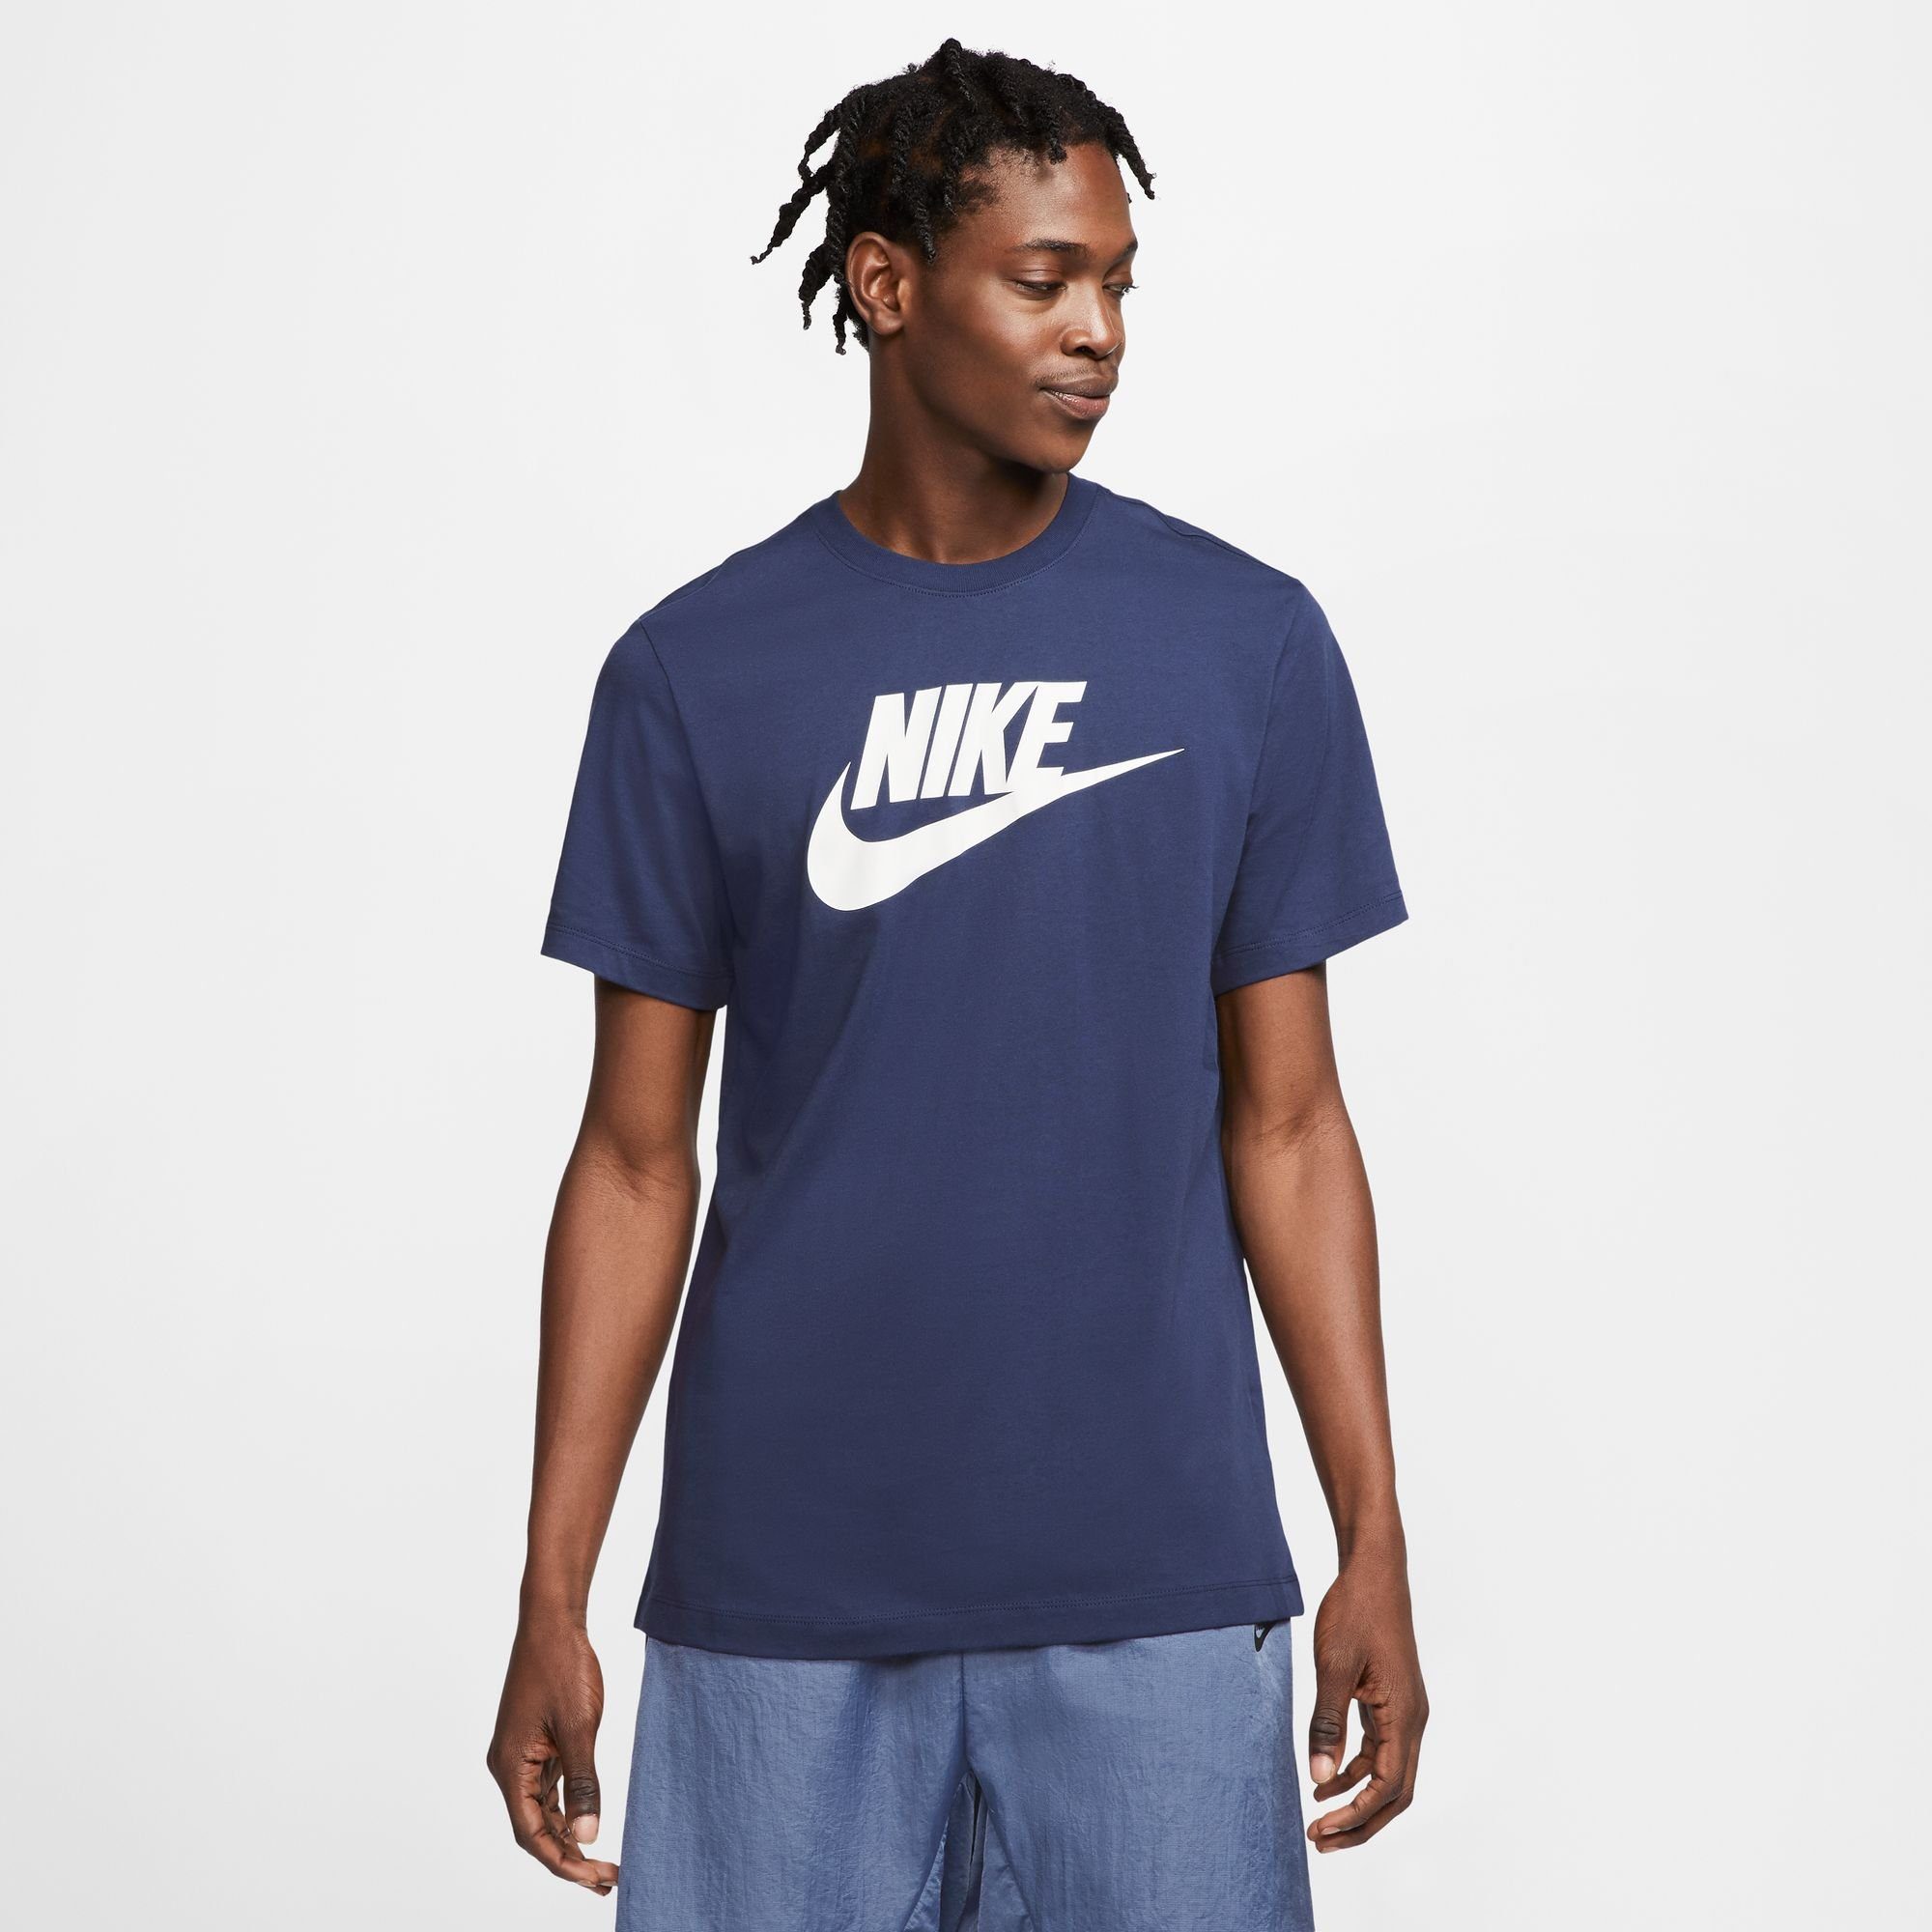 Nike Sportswear T-Shirt MEN'S T-SHIRT marine